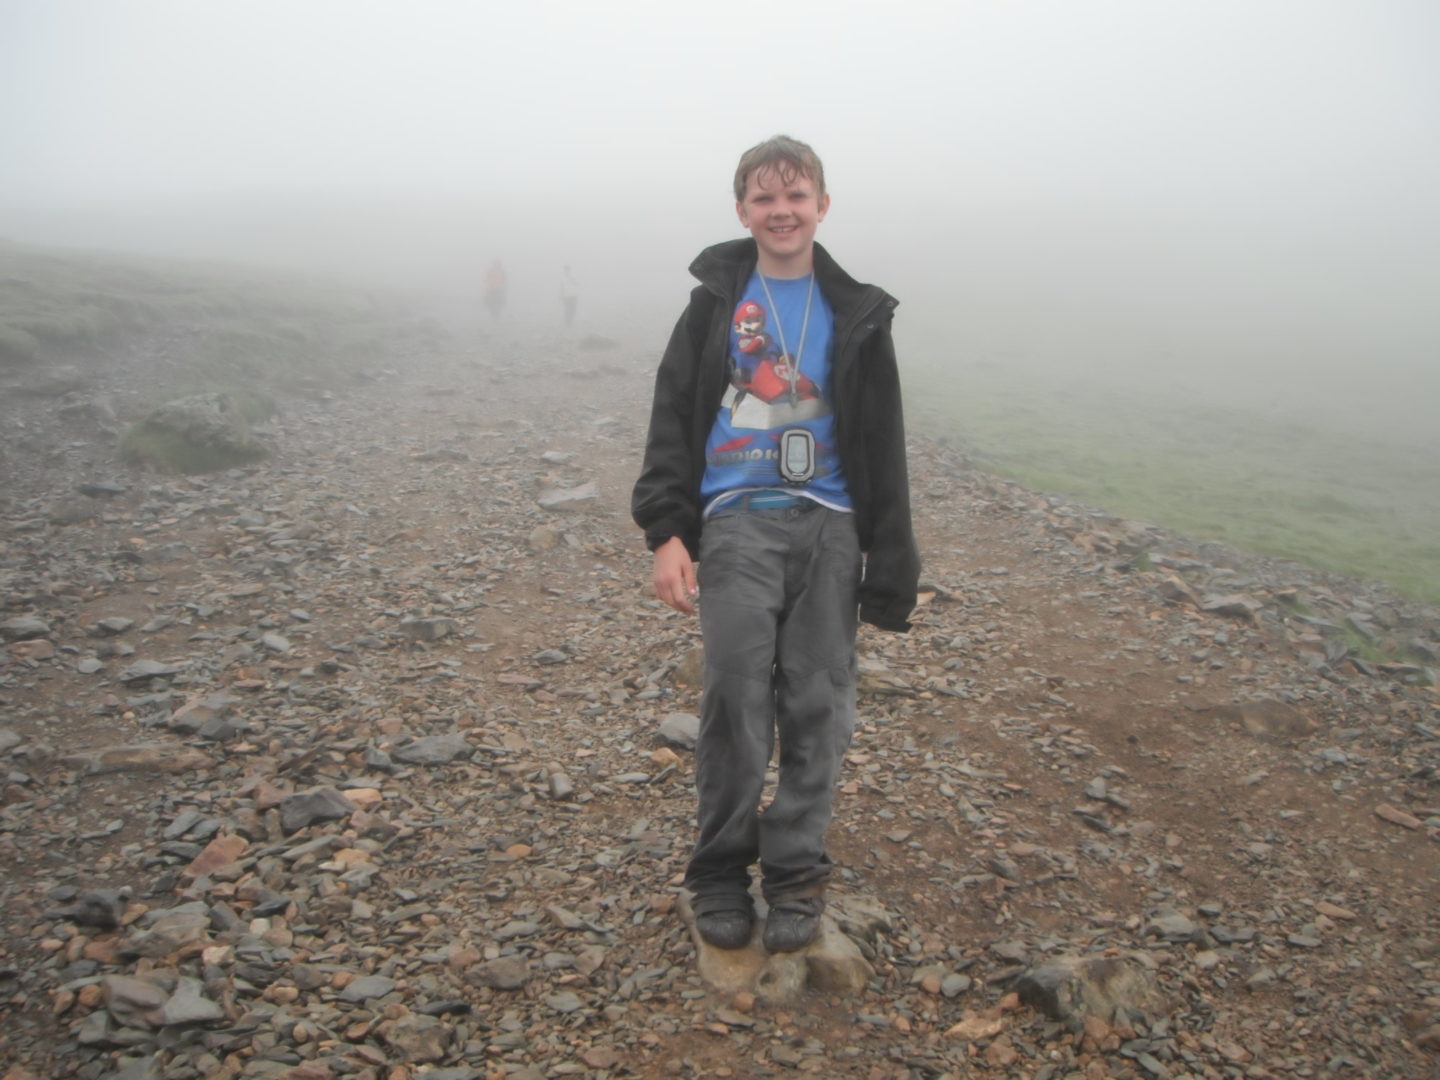 Lochlan at 863m on Mount Snowdon